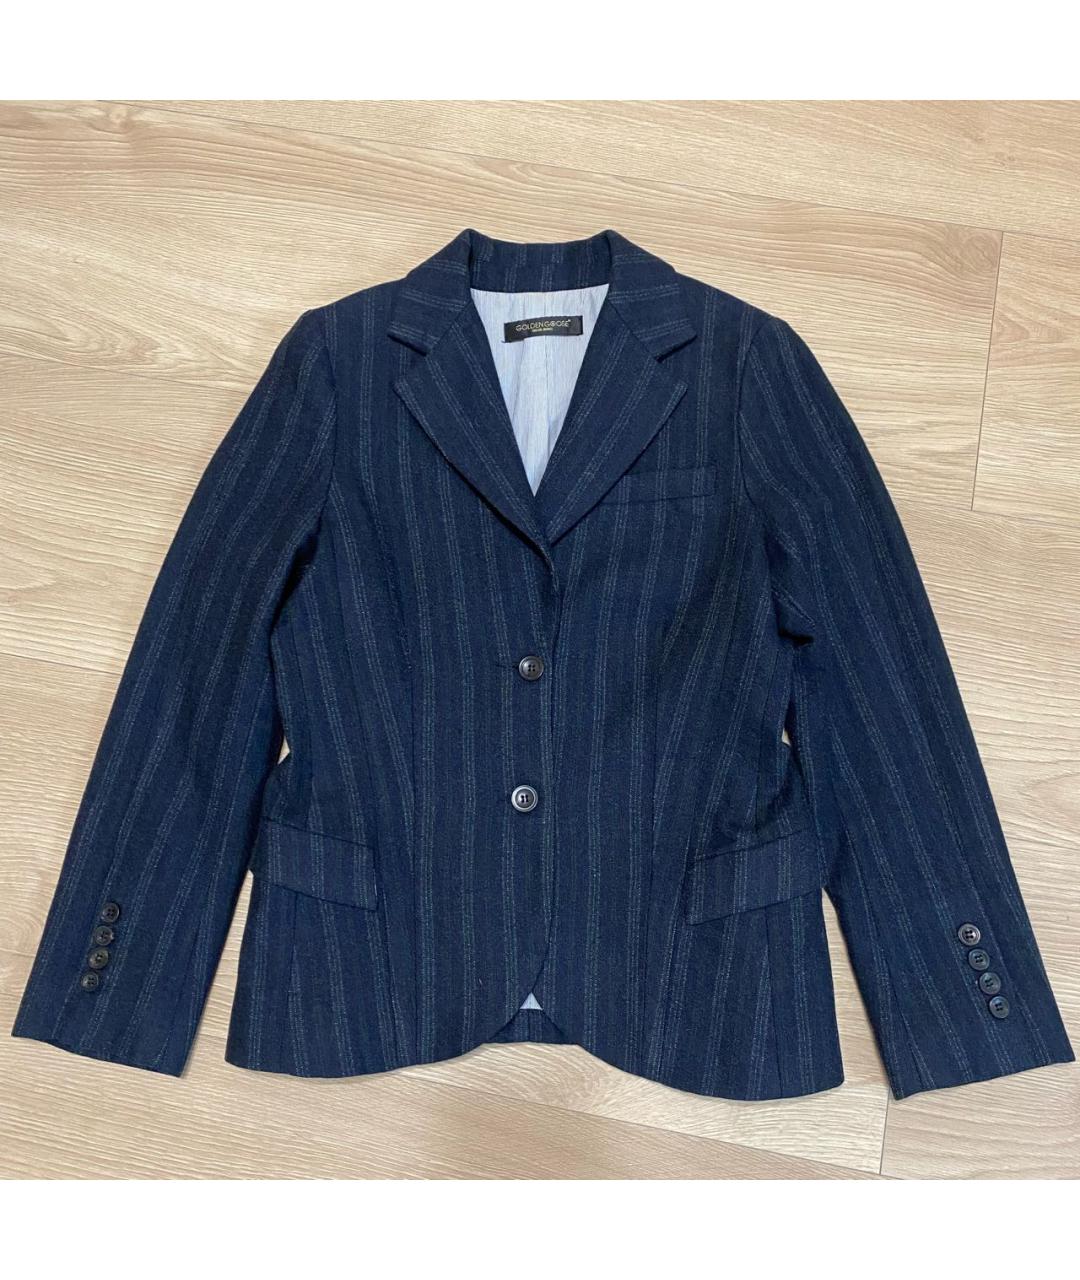 GOLDEN GOOSE DELUXE BRAND Темно-синий шерстяной жакет/пиджак, фото 7